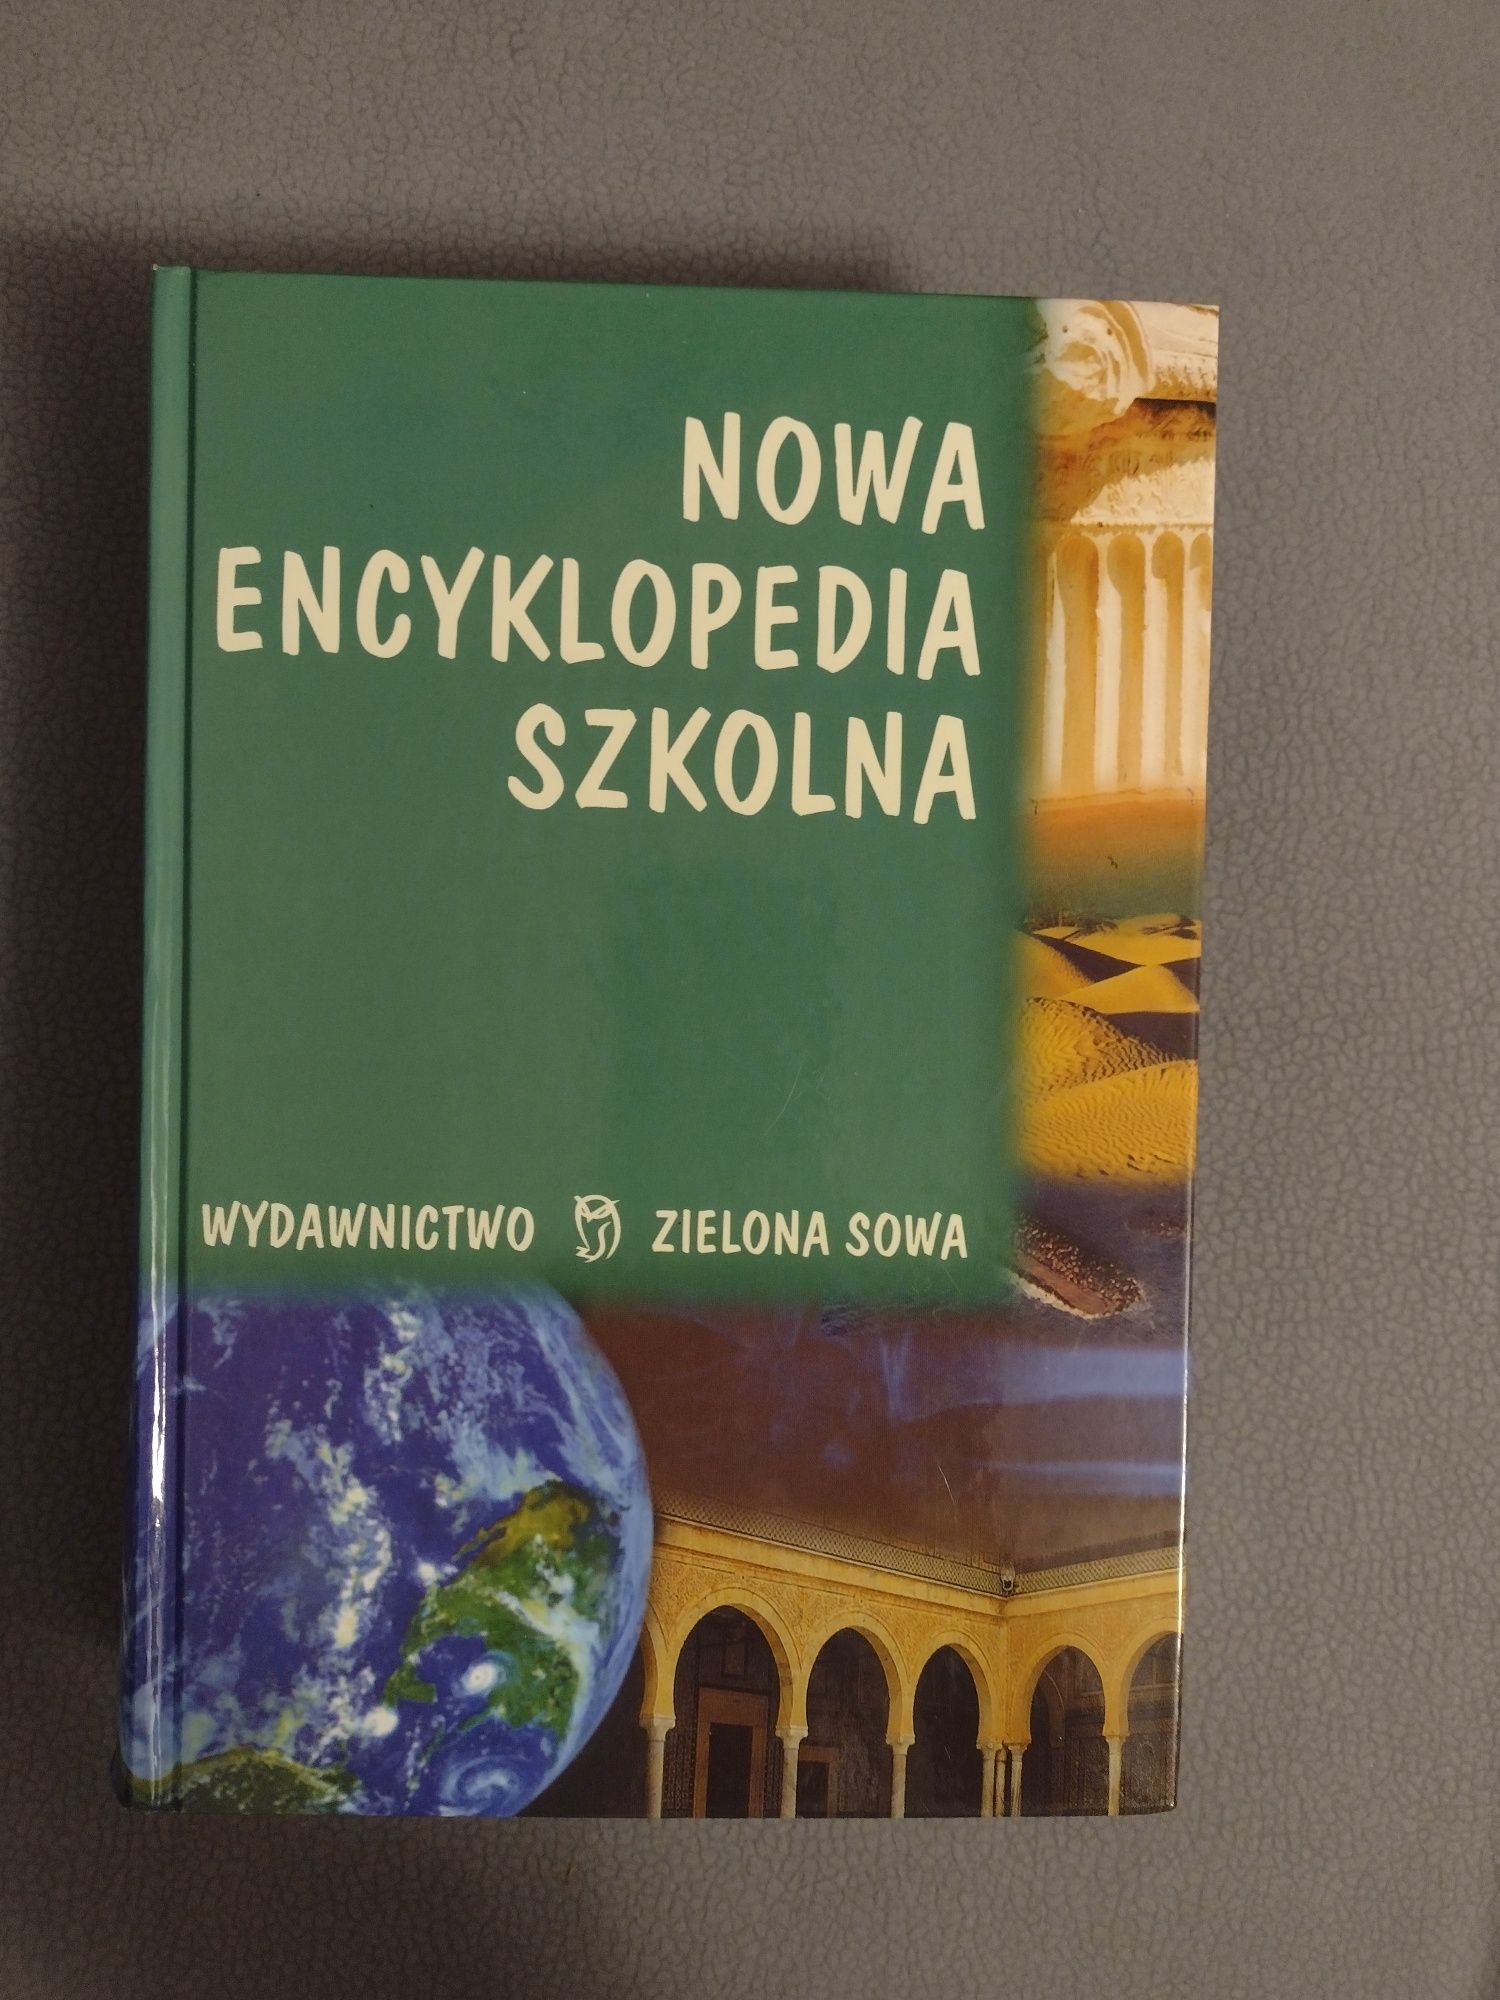 Nowa encyklopedia szkolna